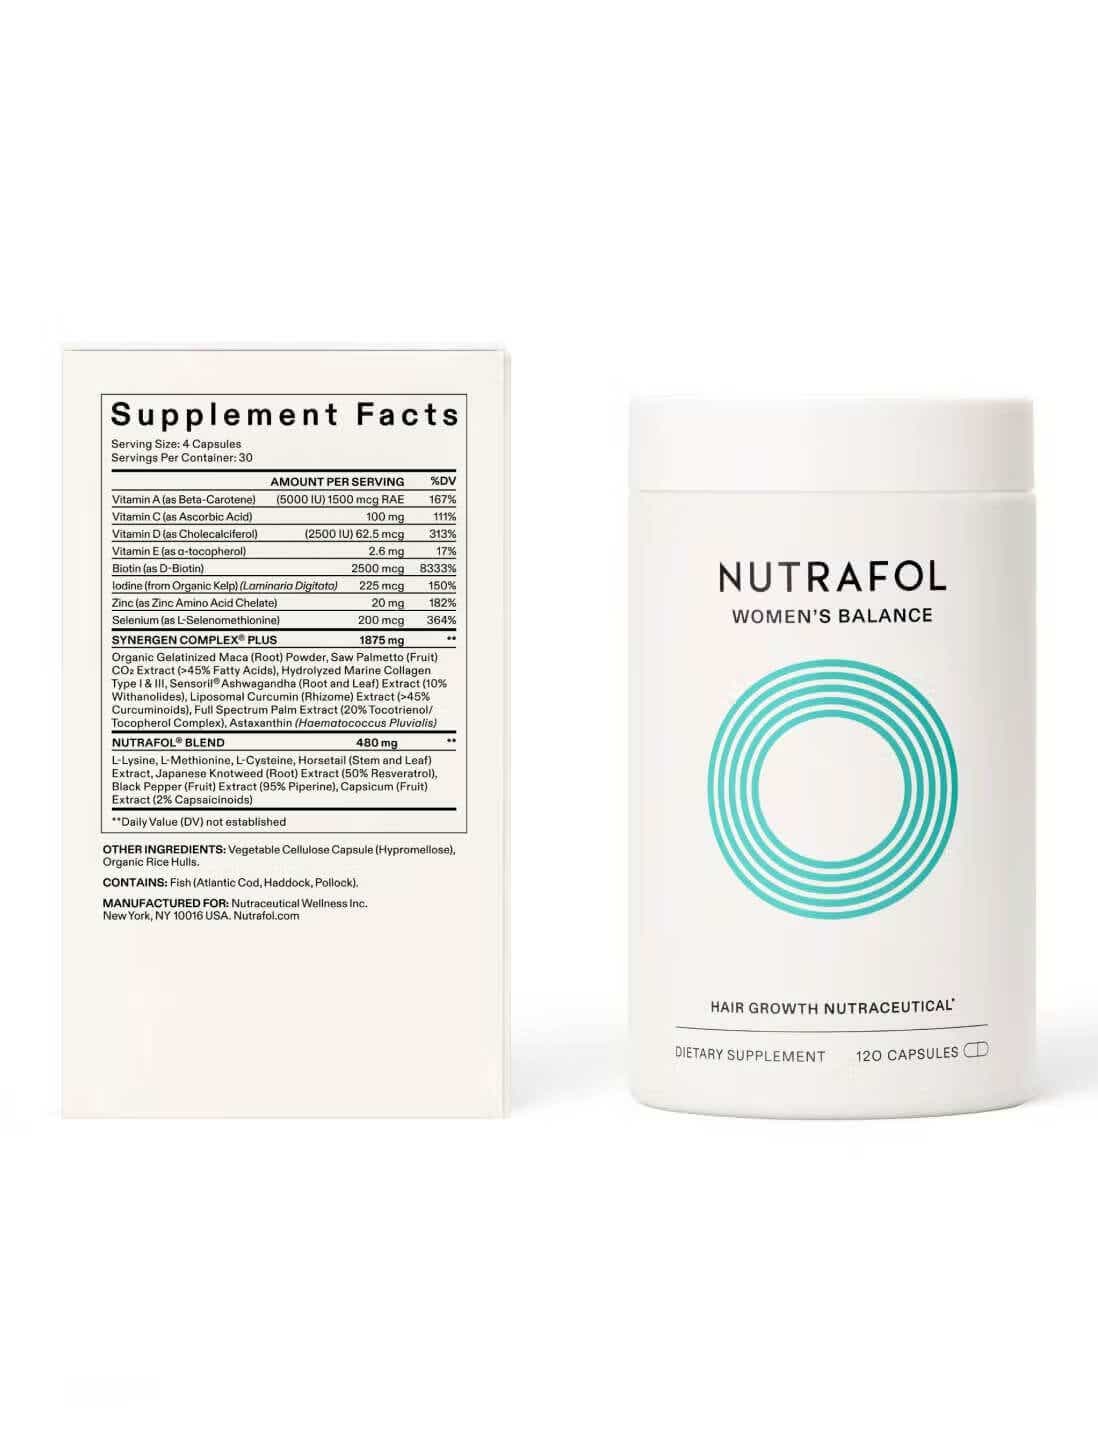 nutrafol hair growth supplement